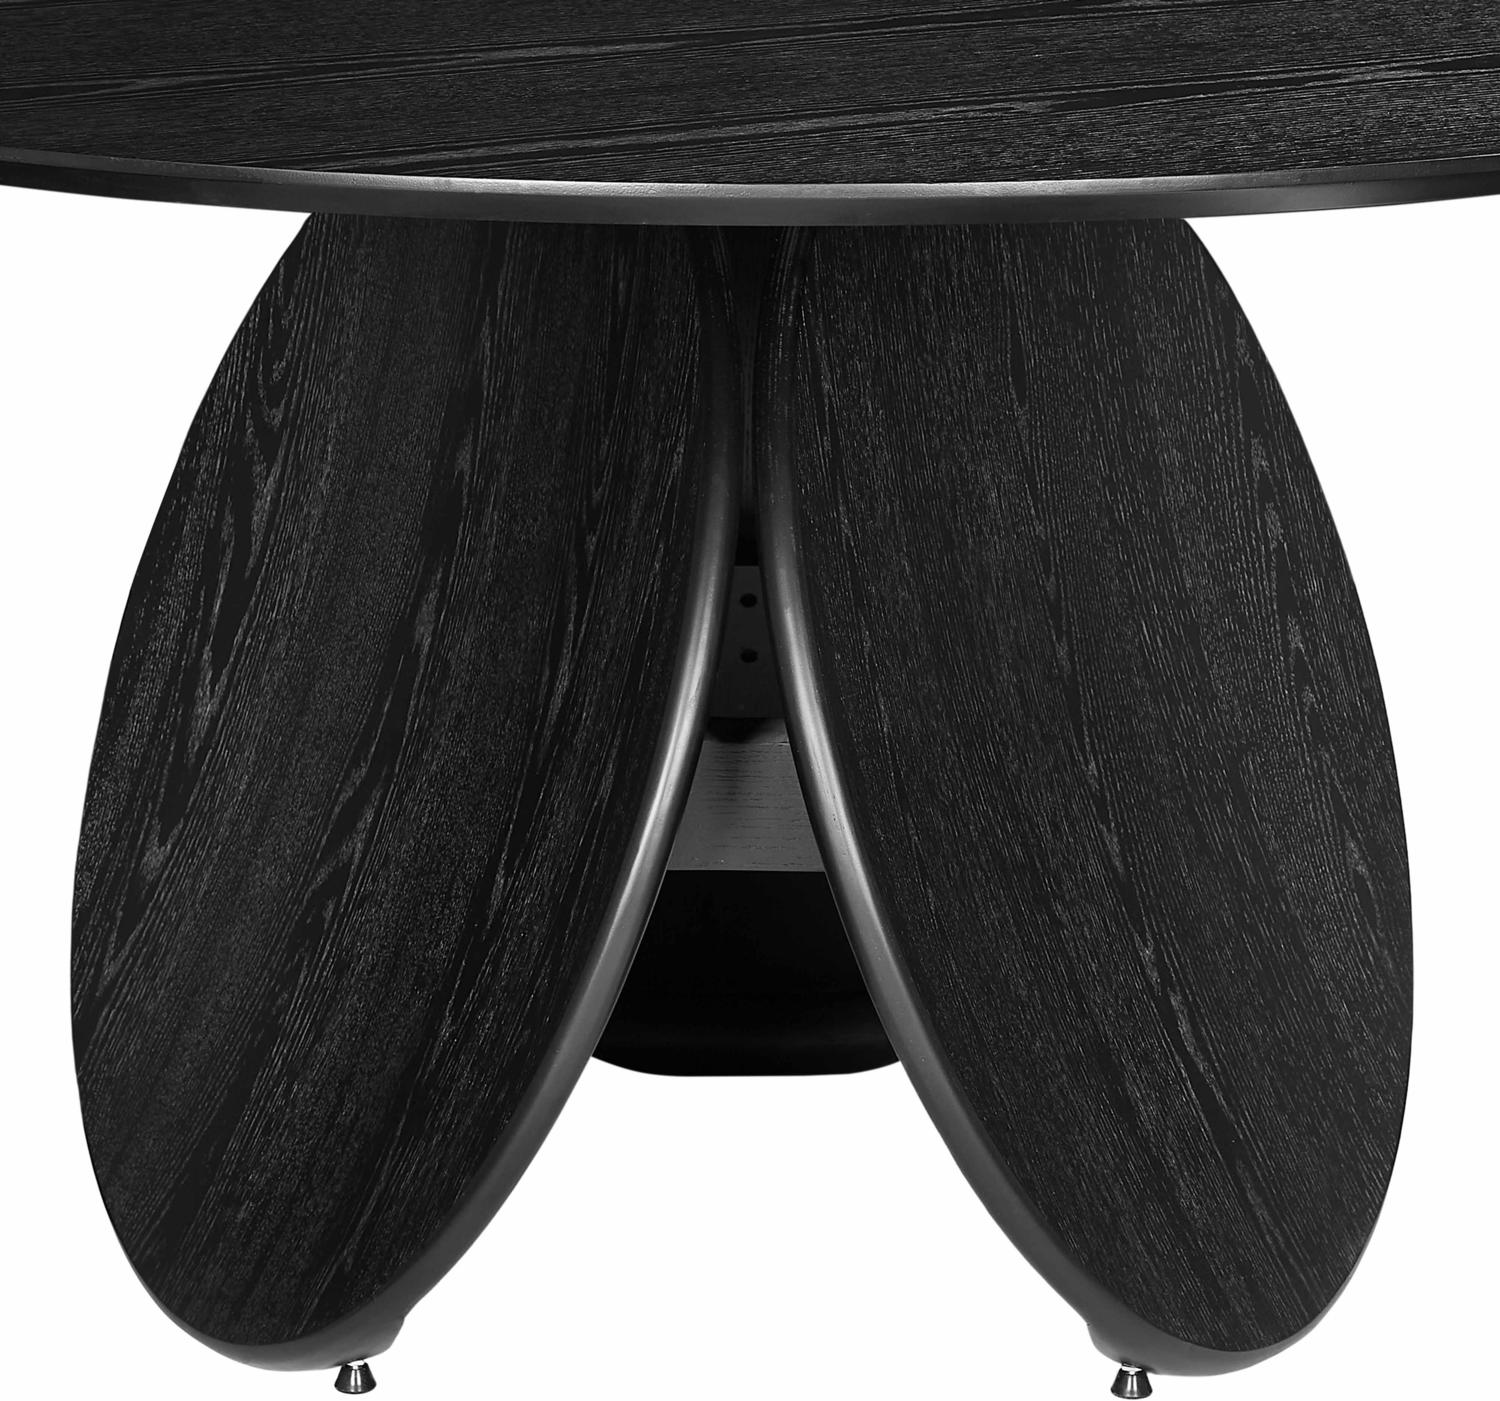 grey wood dining table set Tov Furniture Black